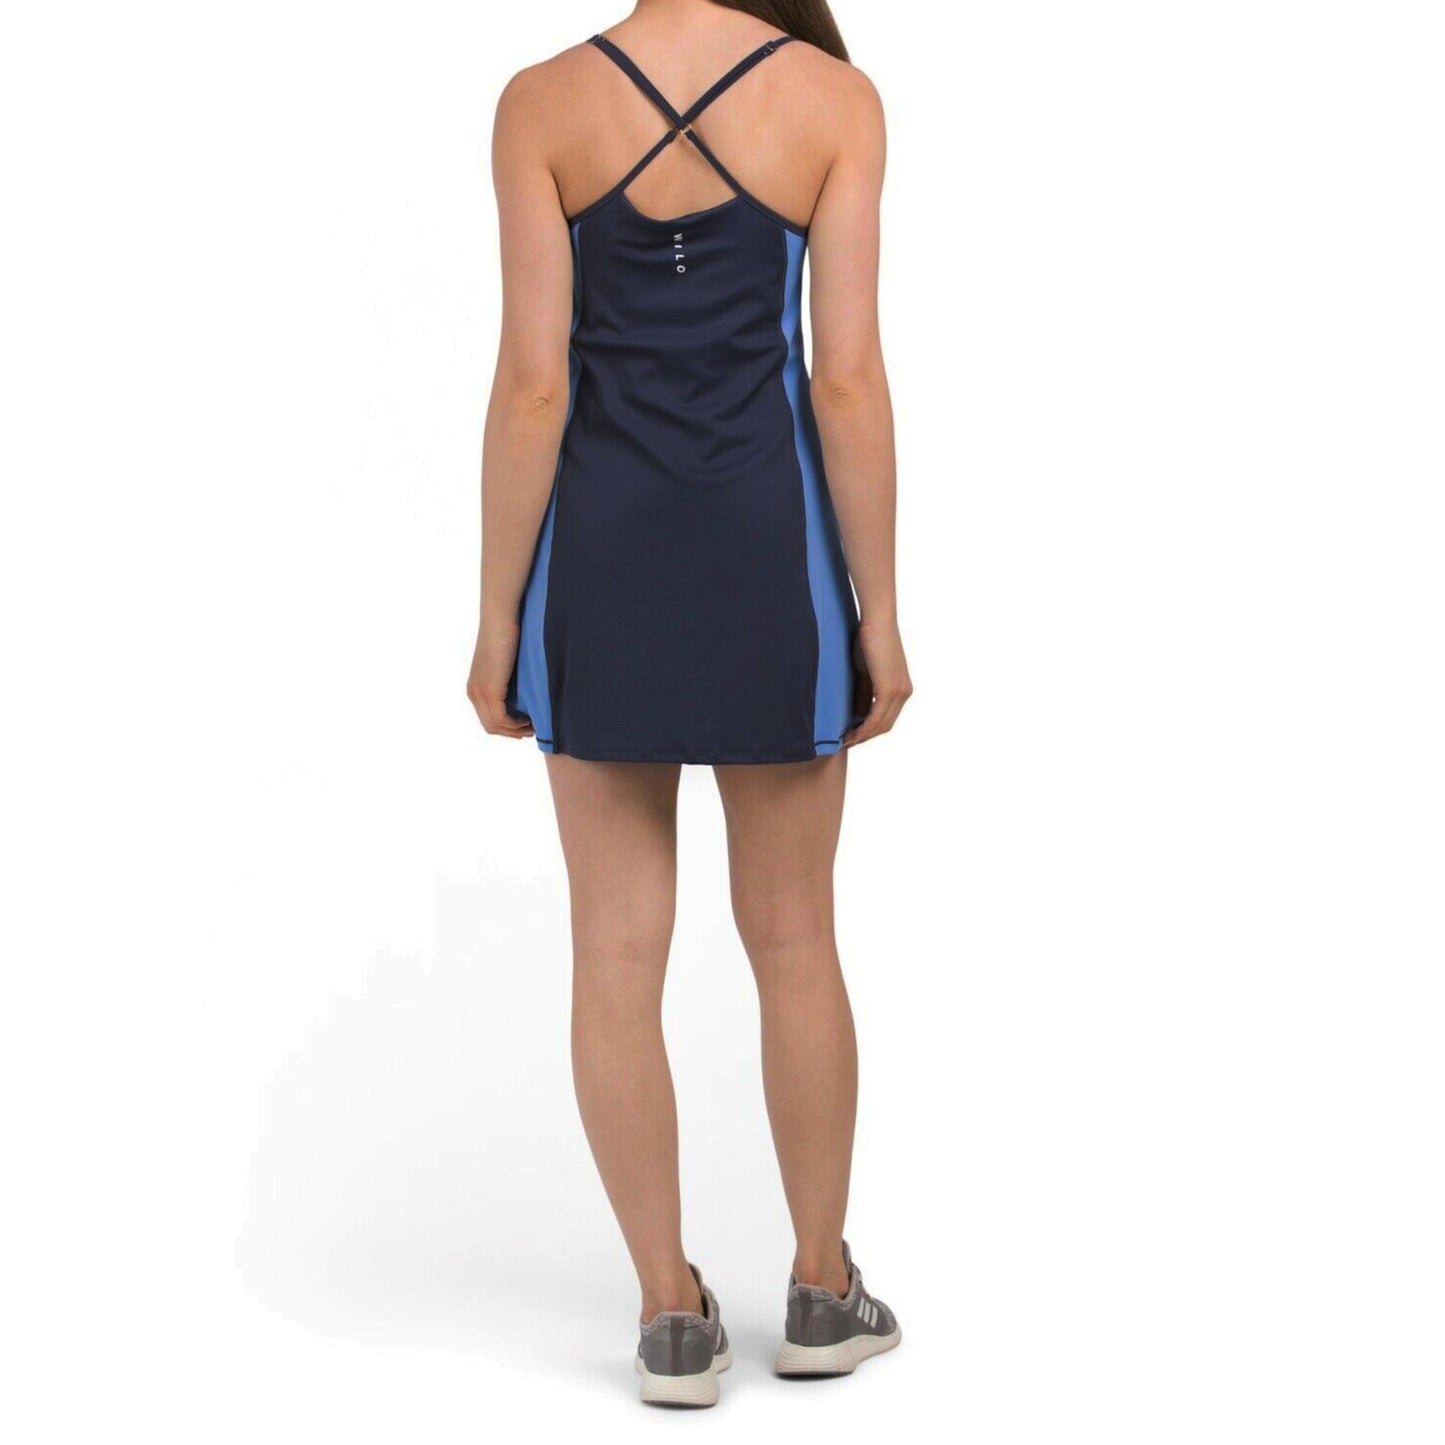 WILO Women's Built-in Compression Shorts Tennis Mini Dress